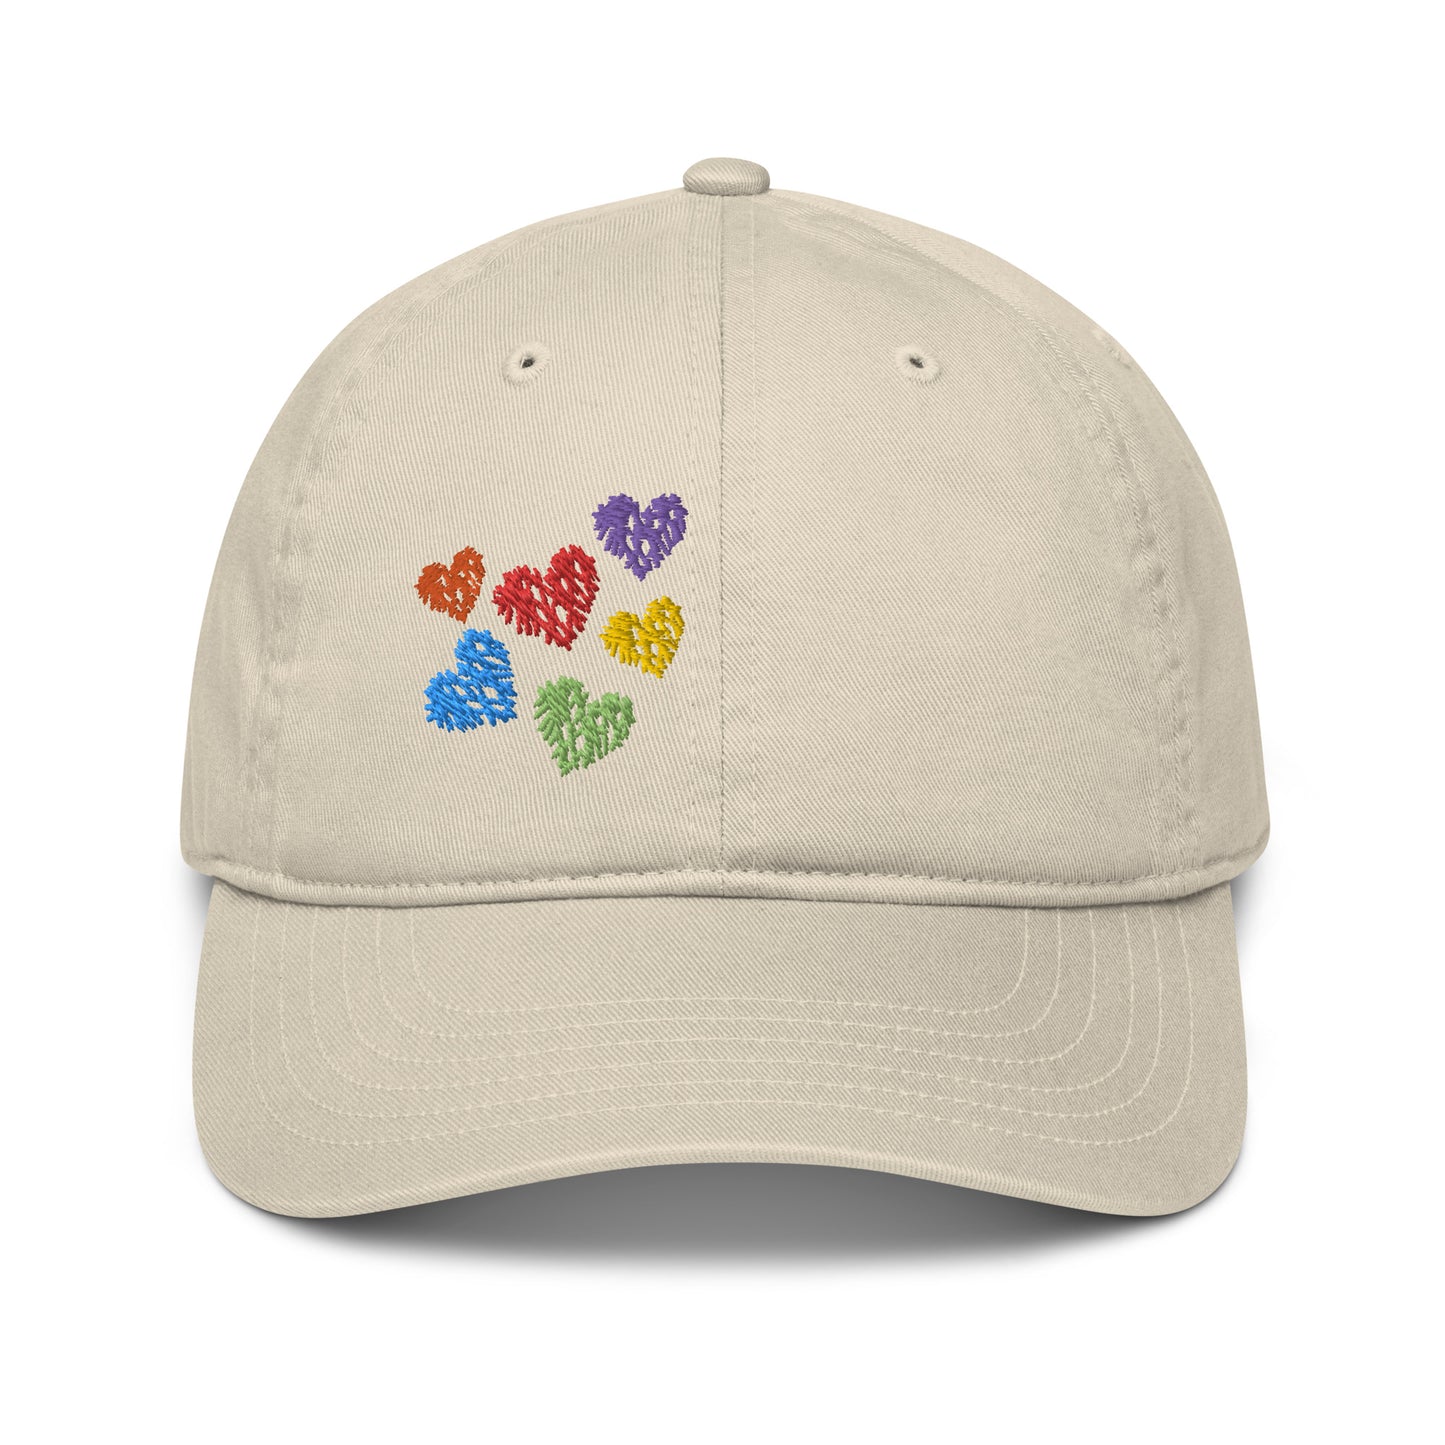 Organic hat: Love Stitch